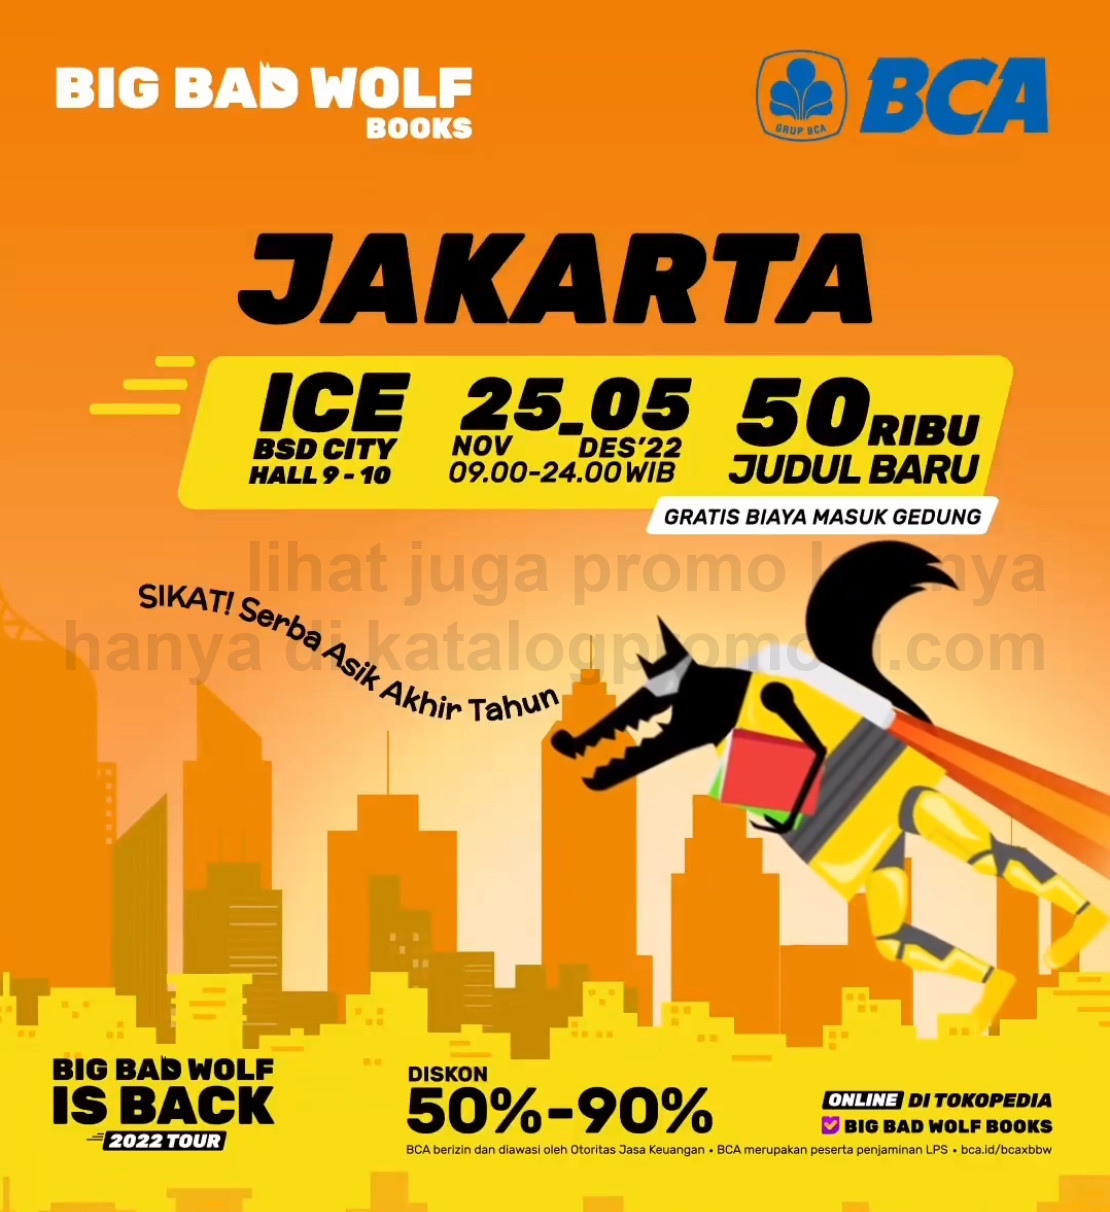 Big Bad Wolf Book Sale 2022 JAKARTA - DISKON hingga 90% mulai tanggal 24 November - 05 Desember 2022